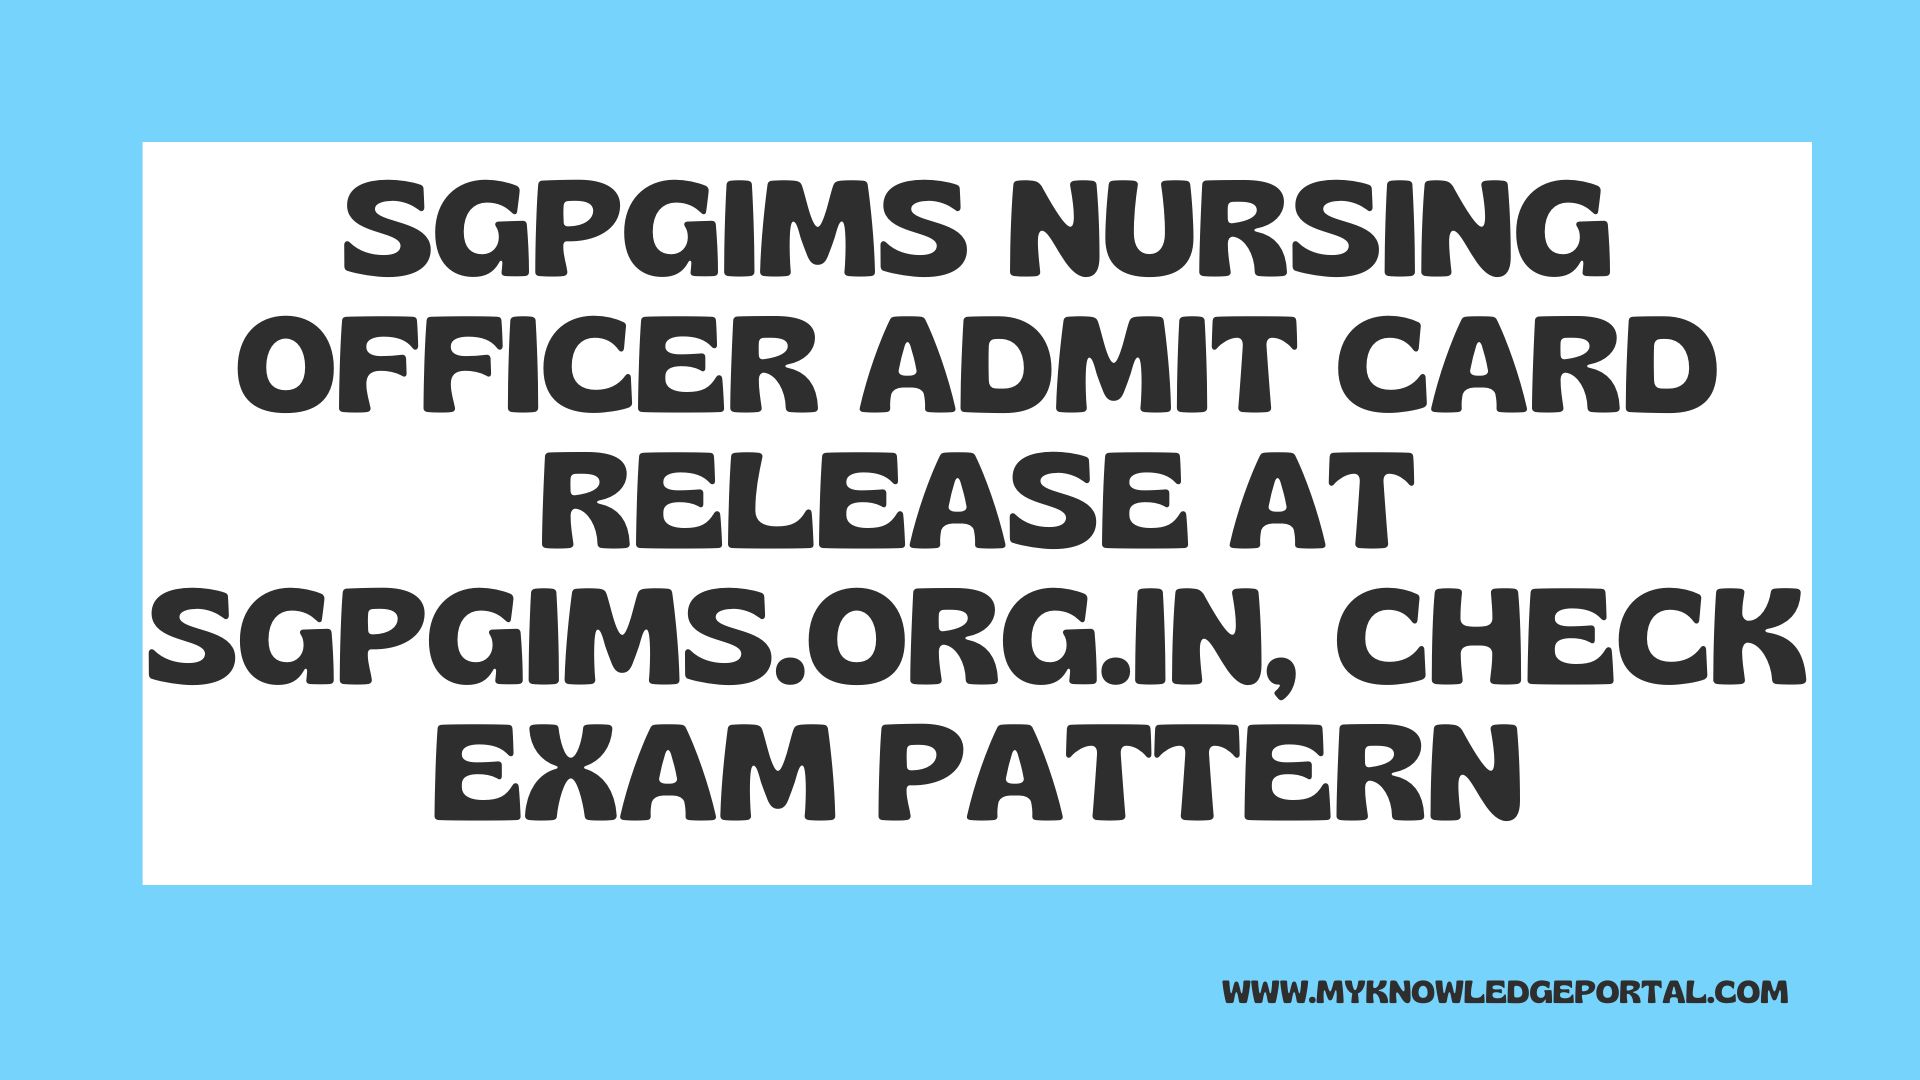 SGPGIMS Nursing Officer Admit Card Release at sgpgims.org.in, Check exam pattern